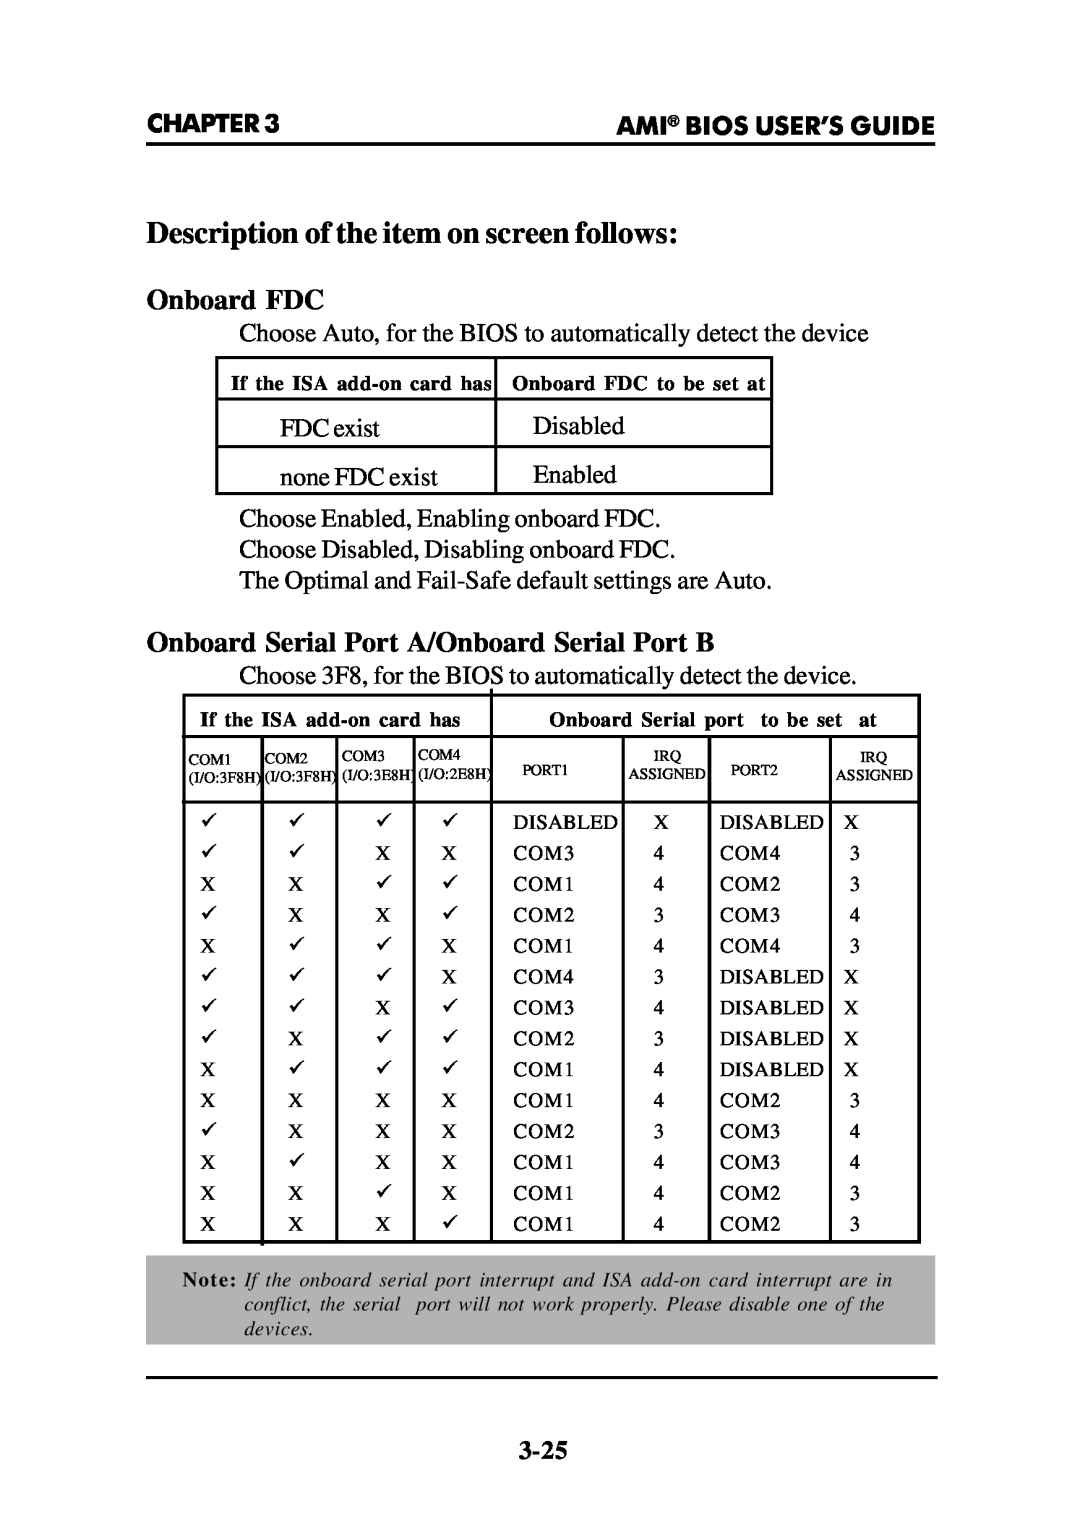 Intel MS-6112 manual Onboard FDC, Onboard Serial Port A/Onboard Serial Port B, Description of the item on screen follows 